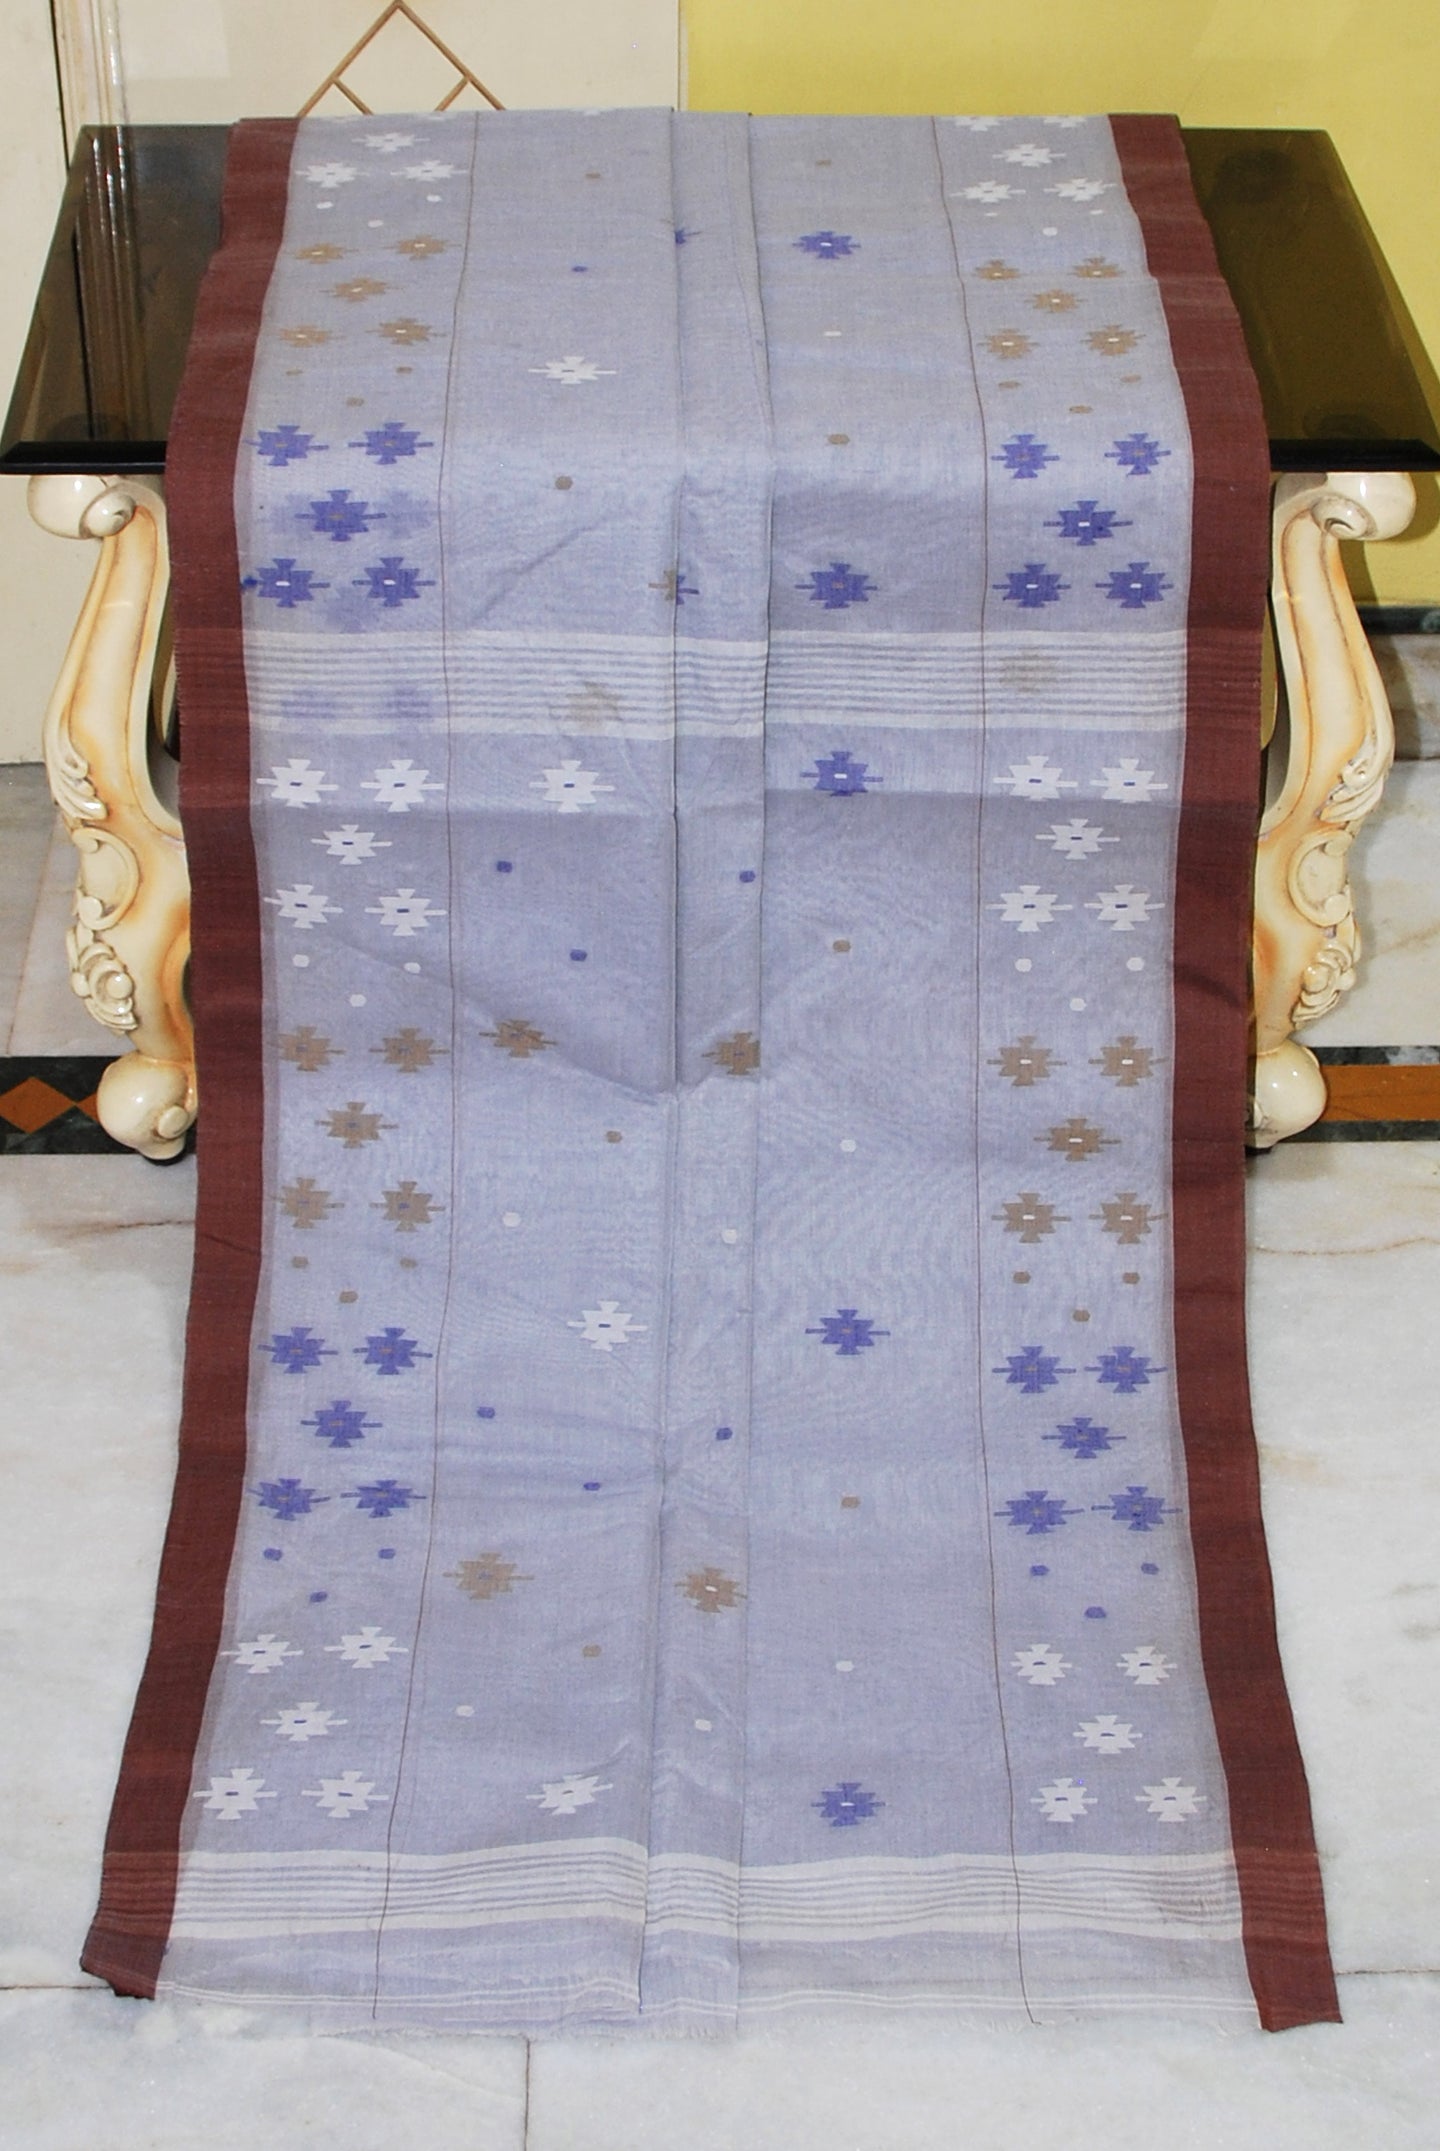 Poth Border Karat Woven Work Pure Cotton Jamdani Saree in Cool Grey, Brown and Multicolored Thread Work